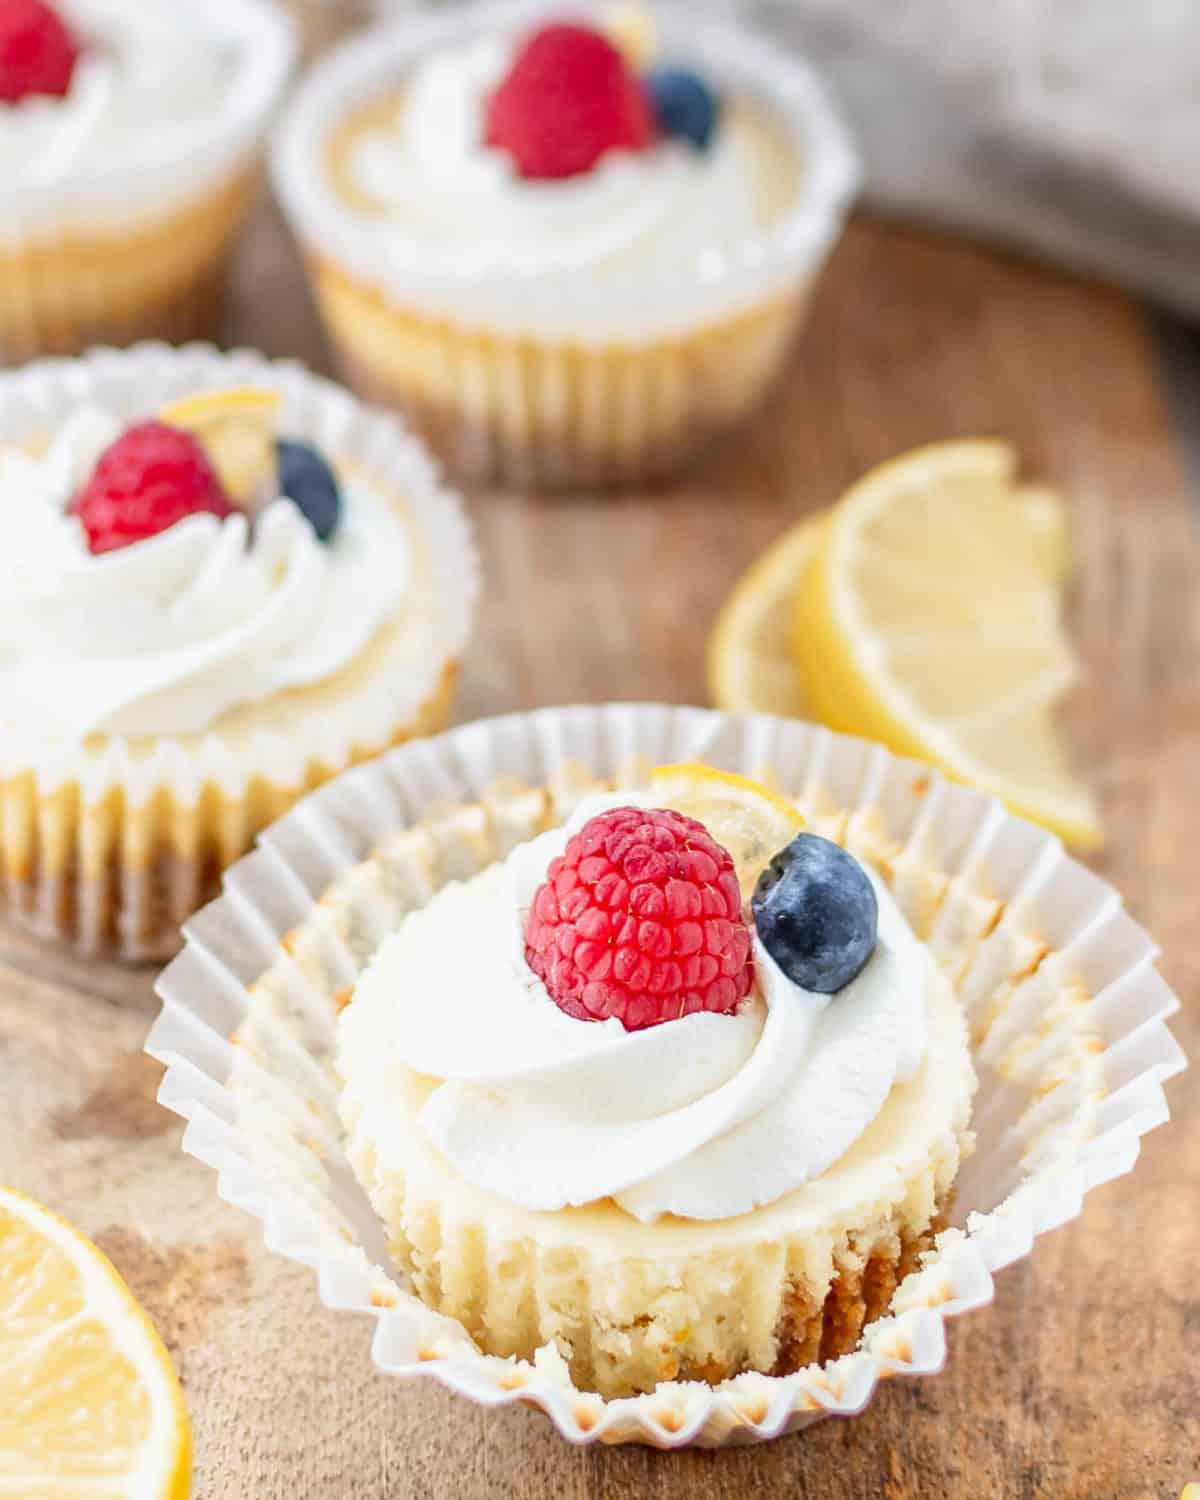 Raspberry and whipped cream on a mini lemon cheesecake.